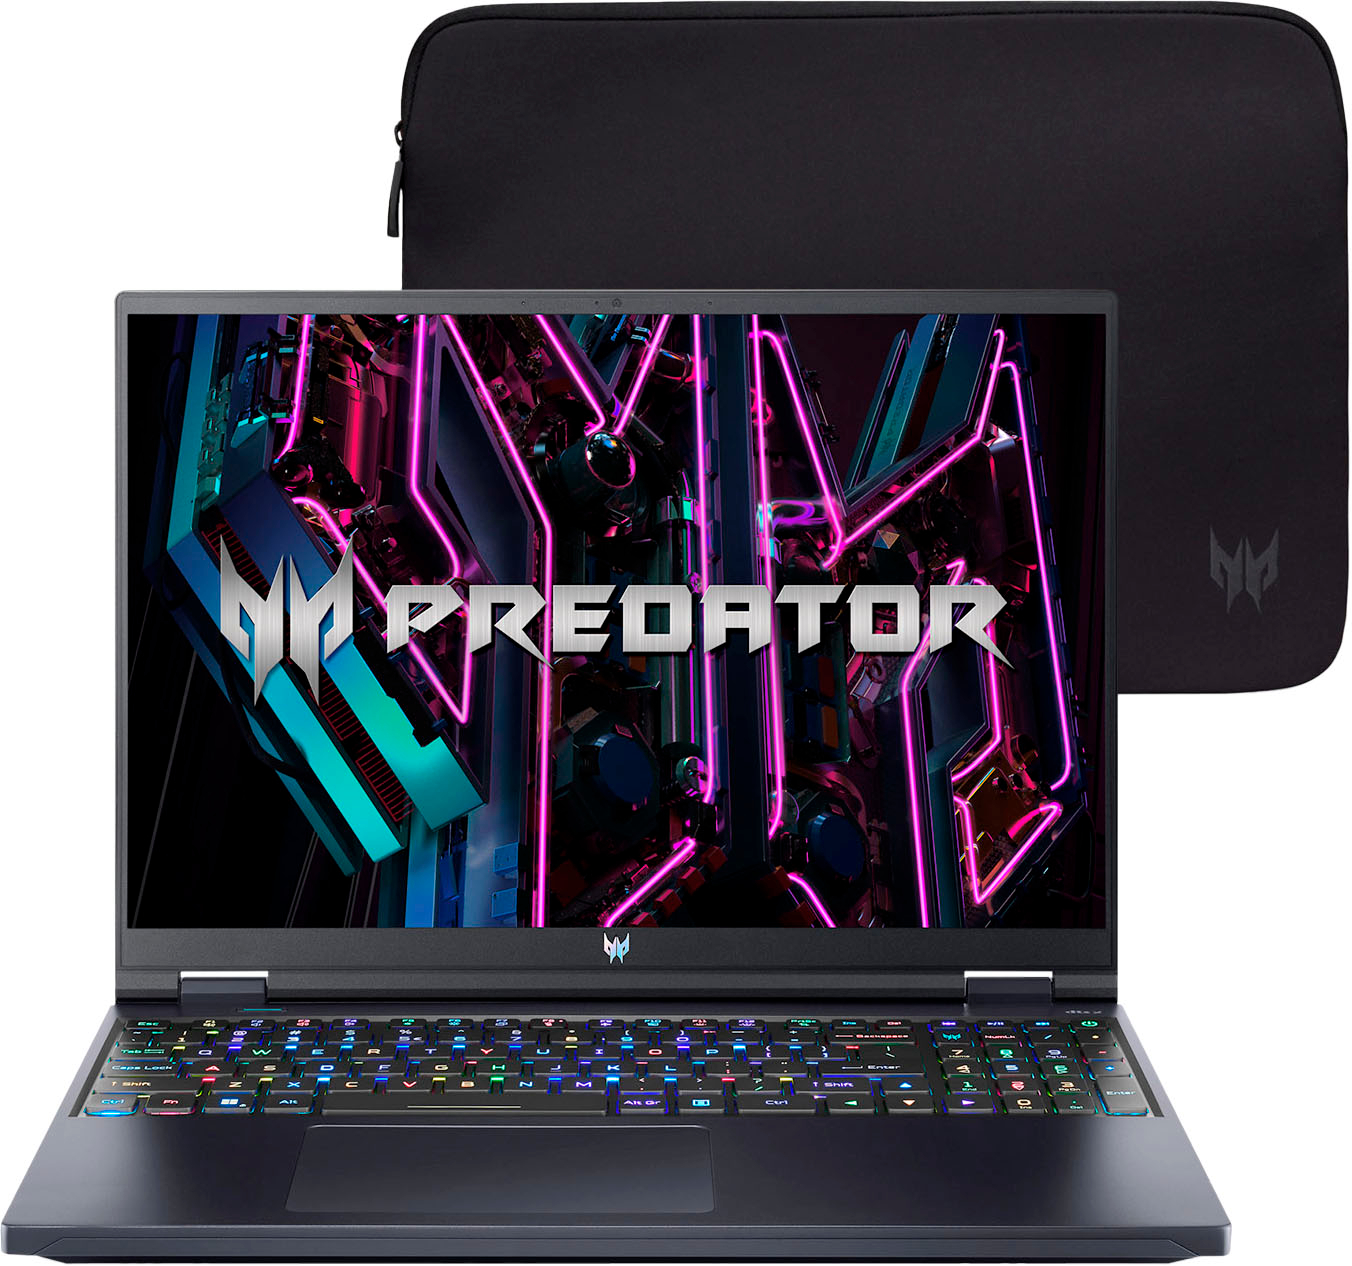 Acer Predator Helios 16 Review - A Powerful Performer